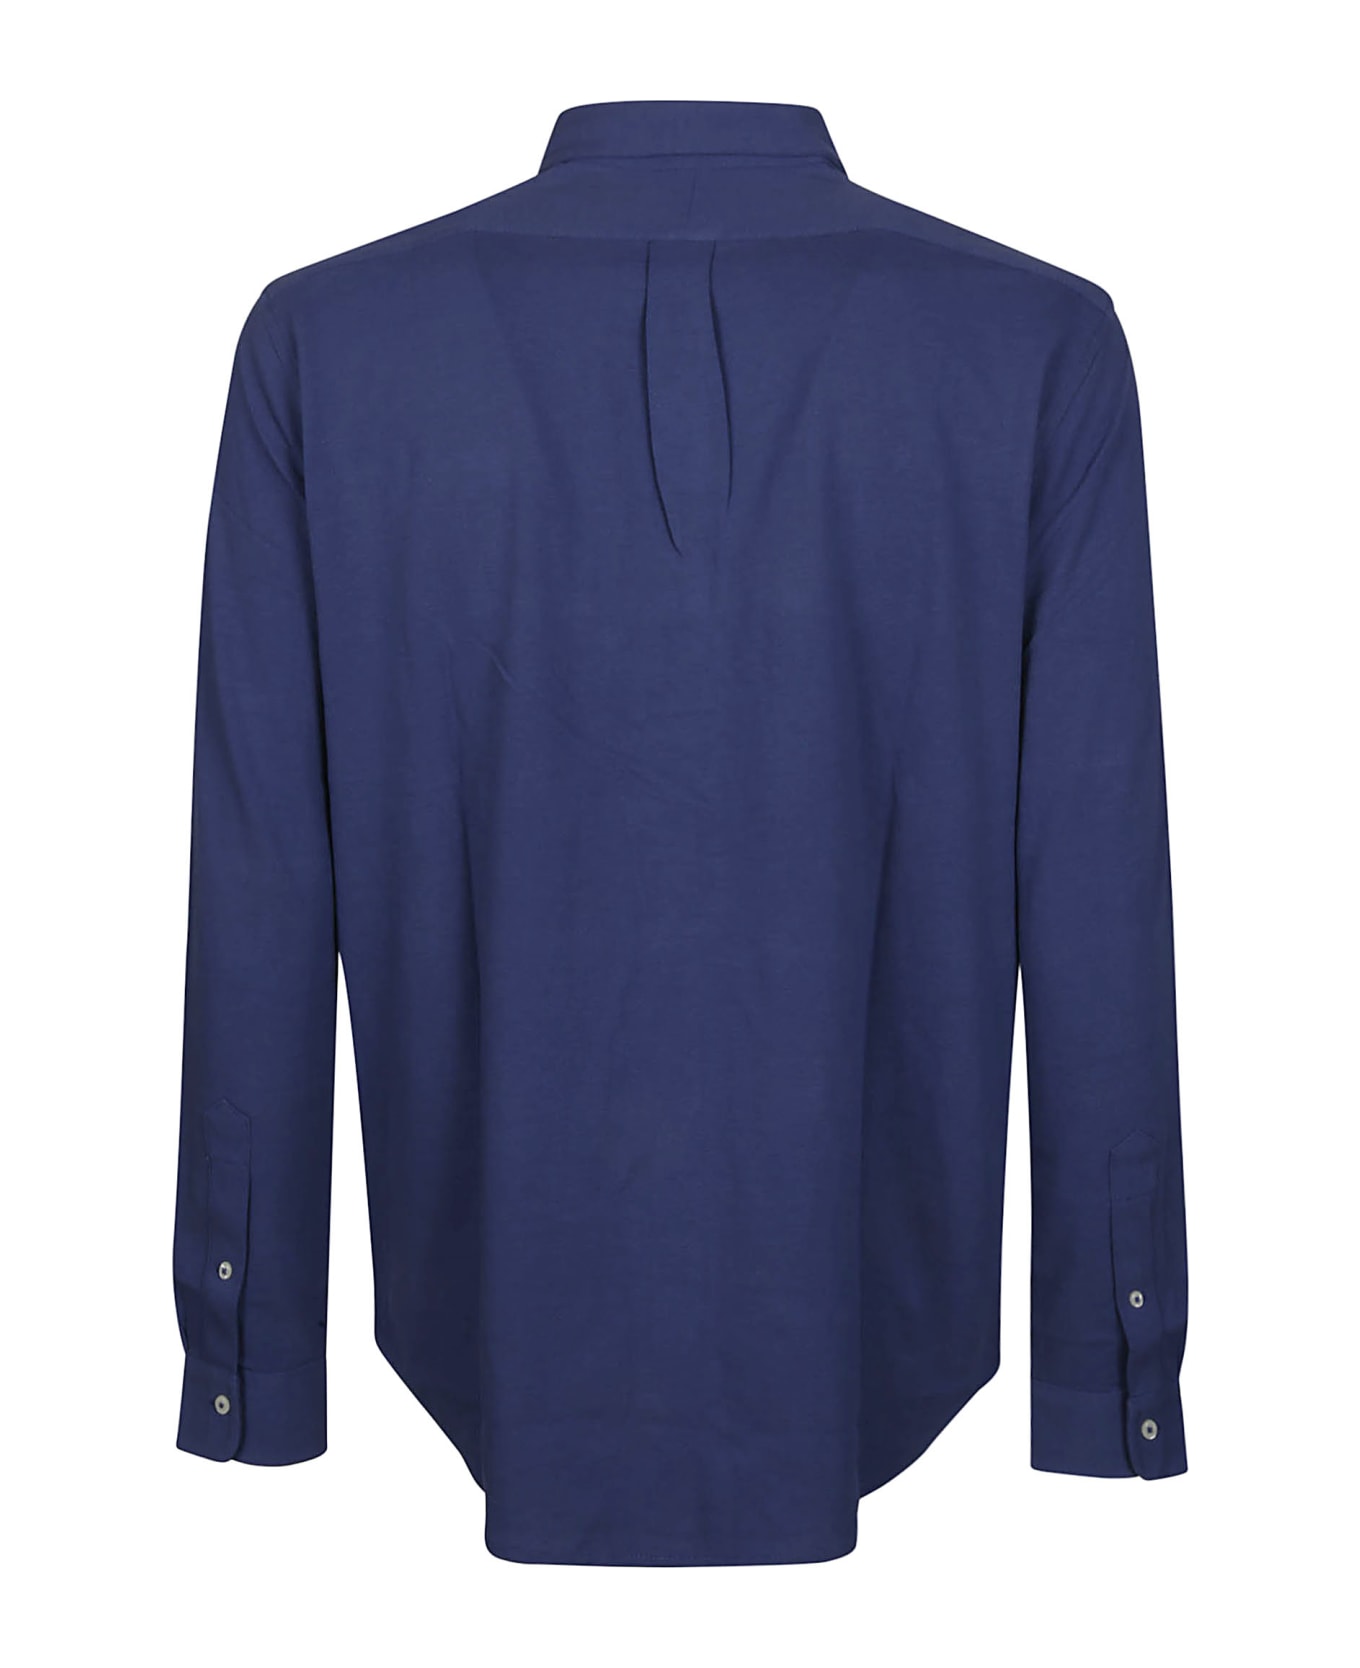 Polo Ralph Lauren Long Sleeve Shirt - Old Royal シャツ